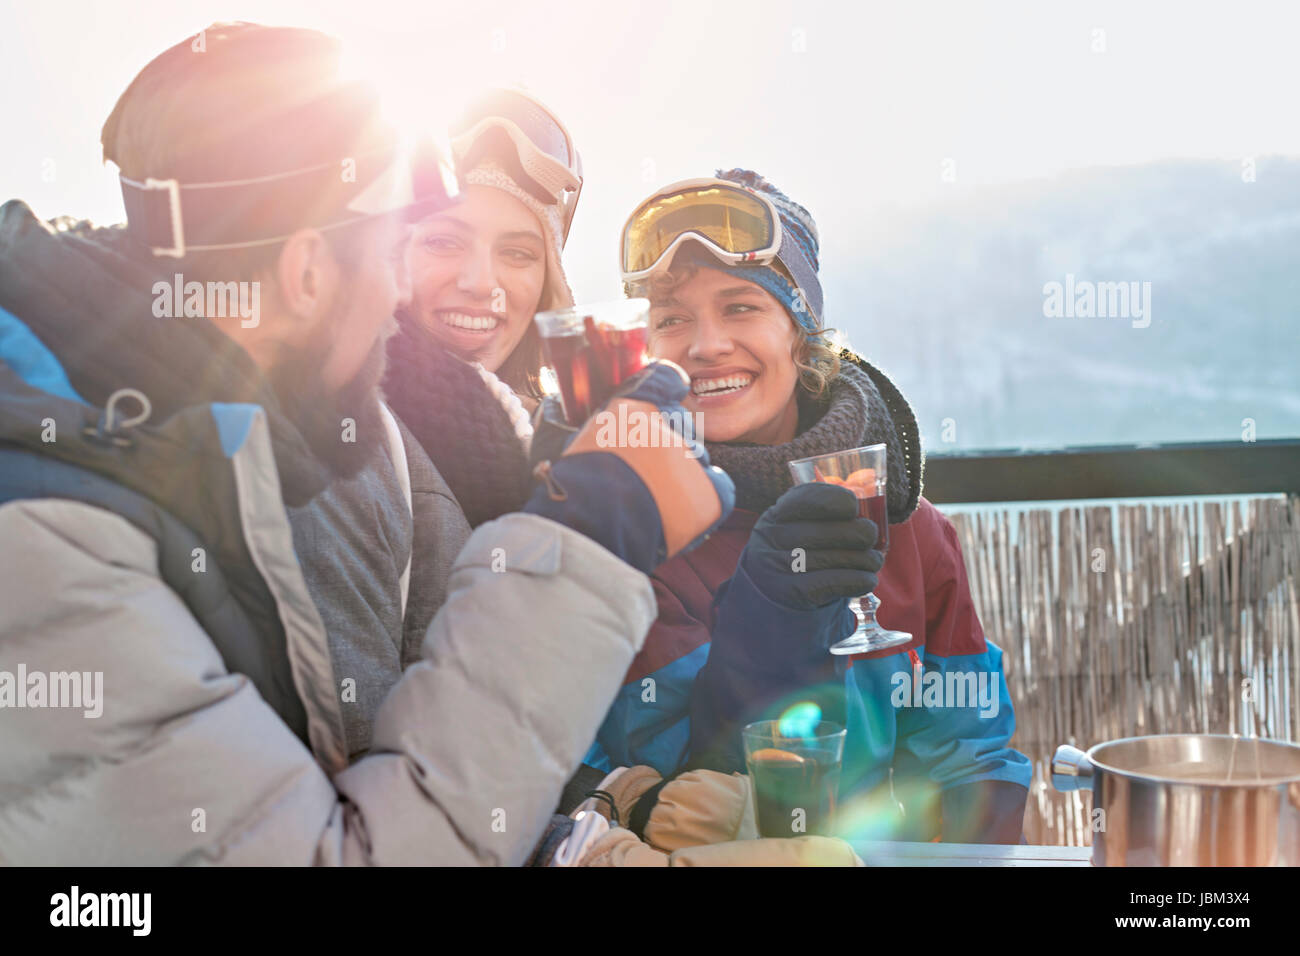 Smiling skier friends drinking cocktails apres-ski Stock Photo